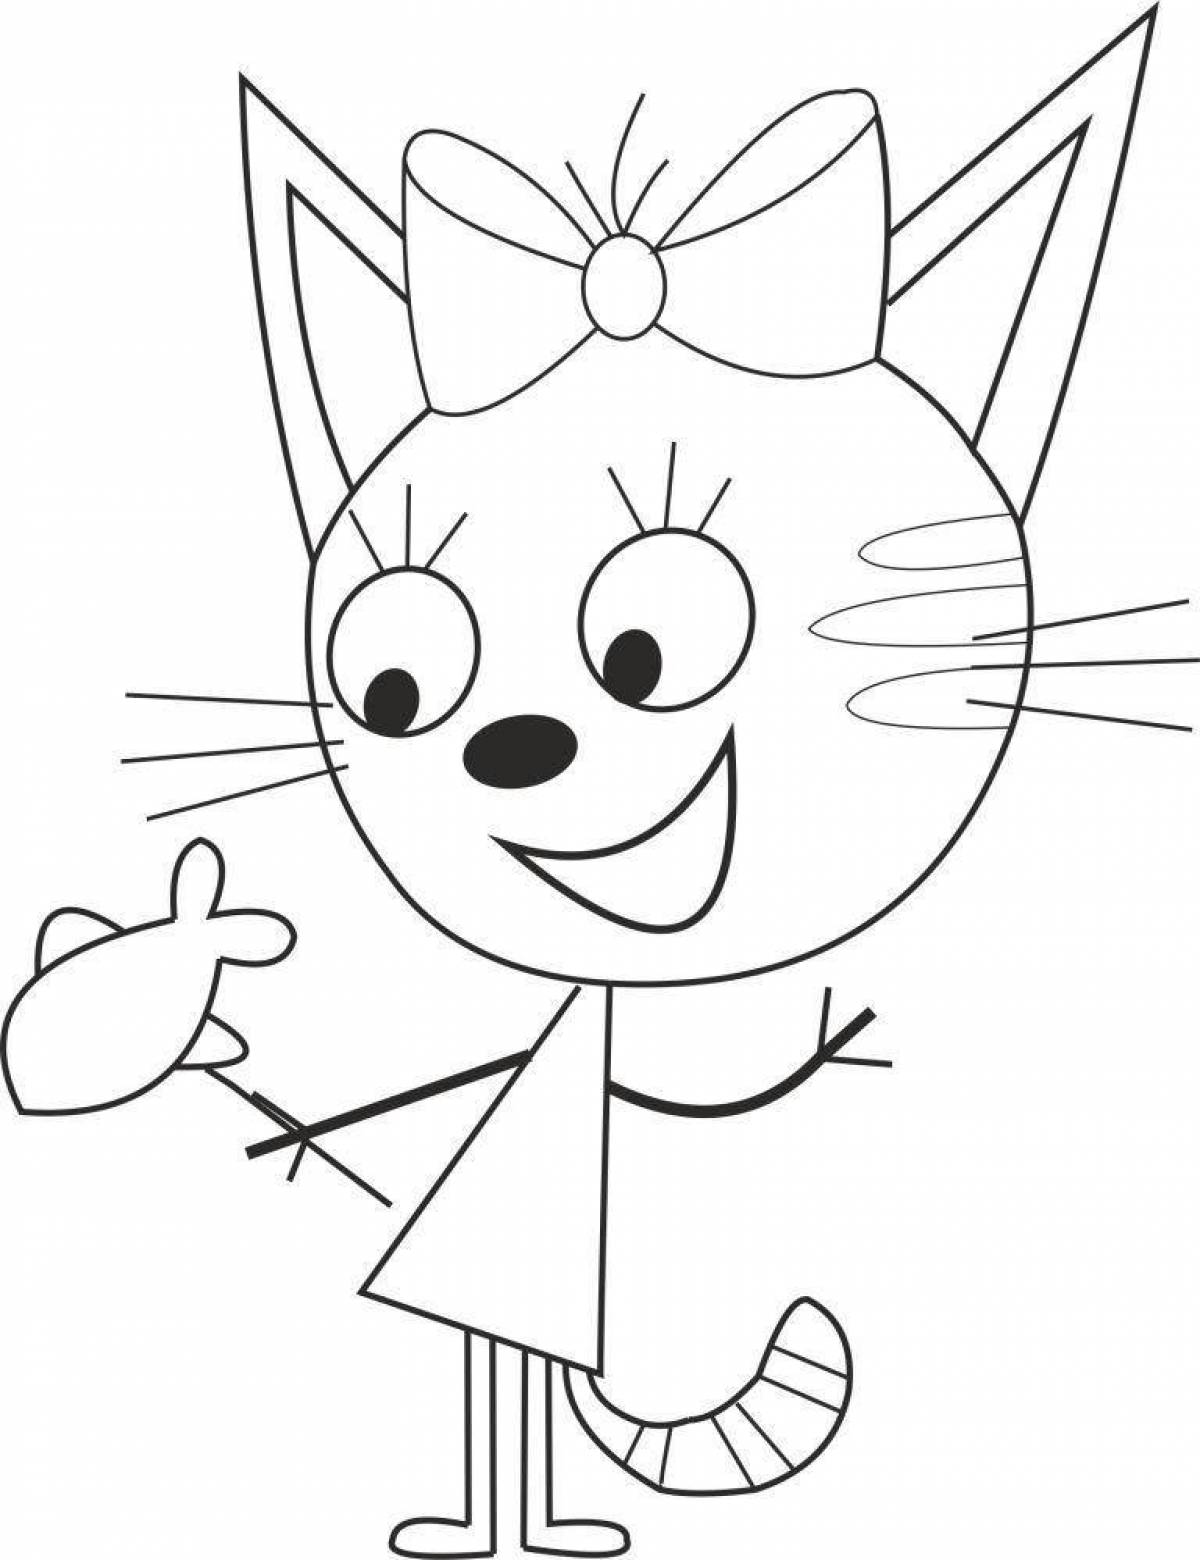 Joyful 3 cats coloring book for kids